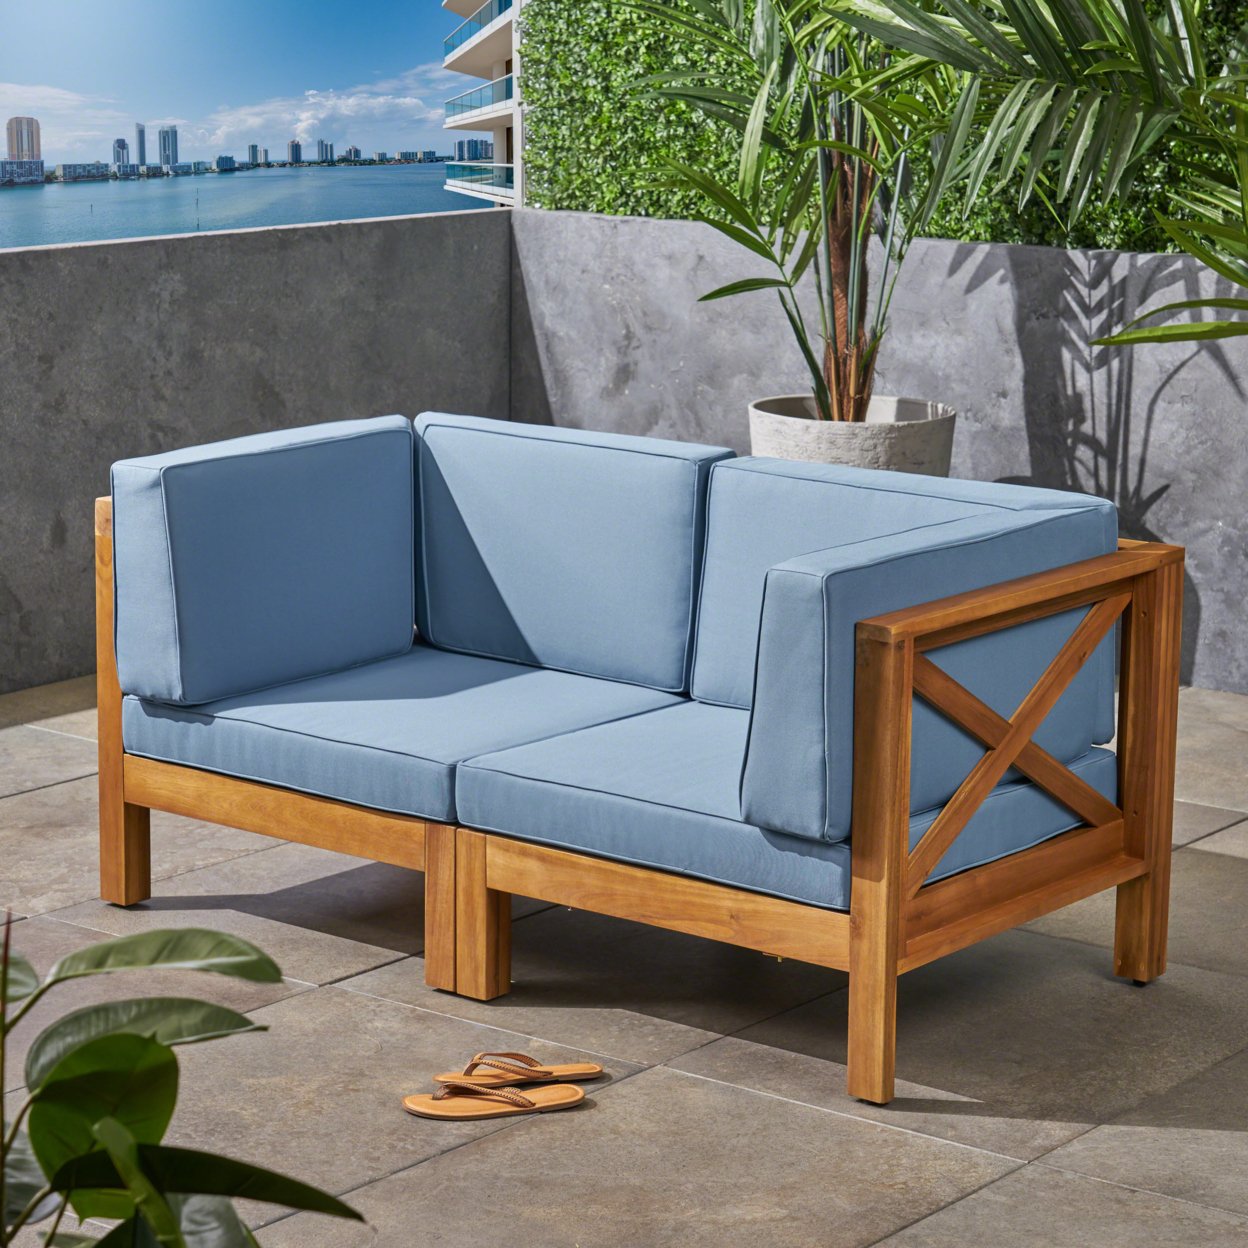 Brava Outdoor Modular Acacia Wood Loveseat With Cushions - Teak Finish + Blue